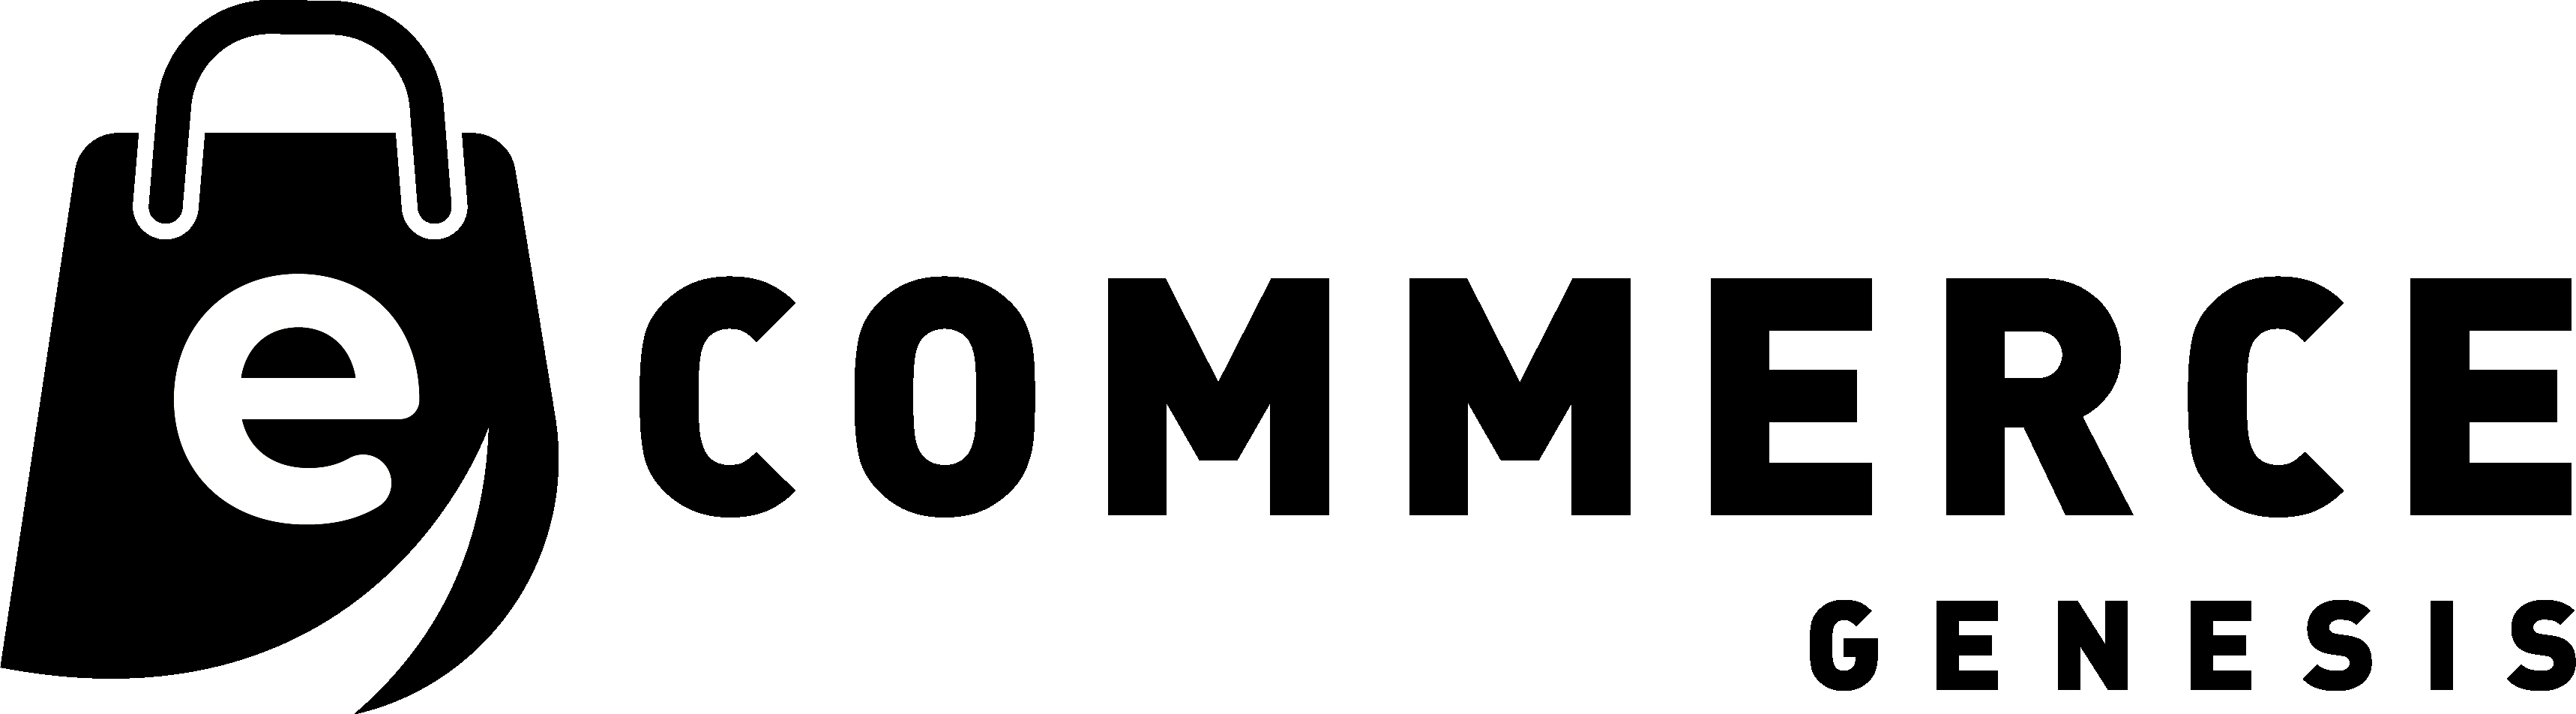 eCommGen logo black